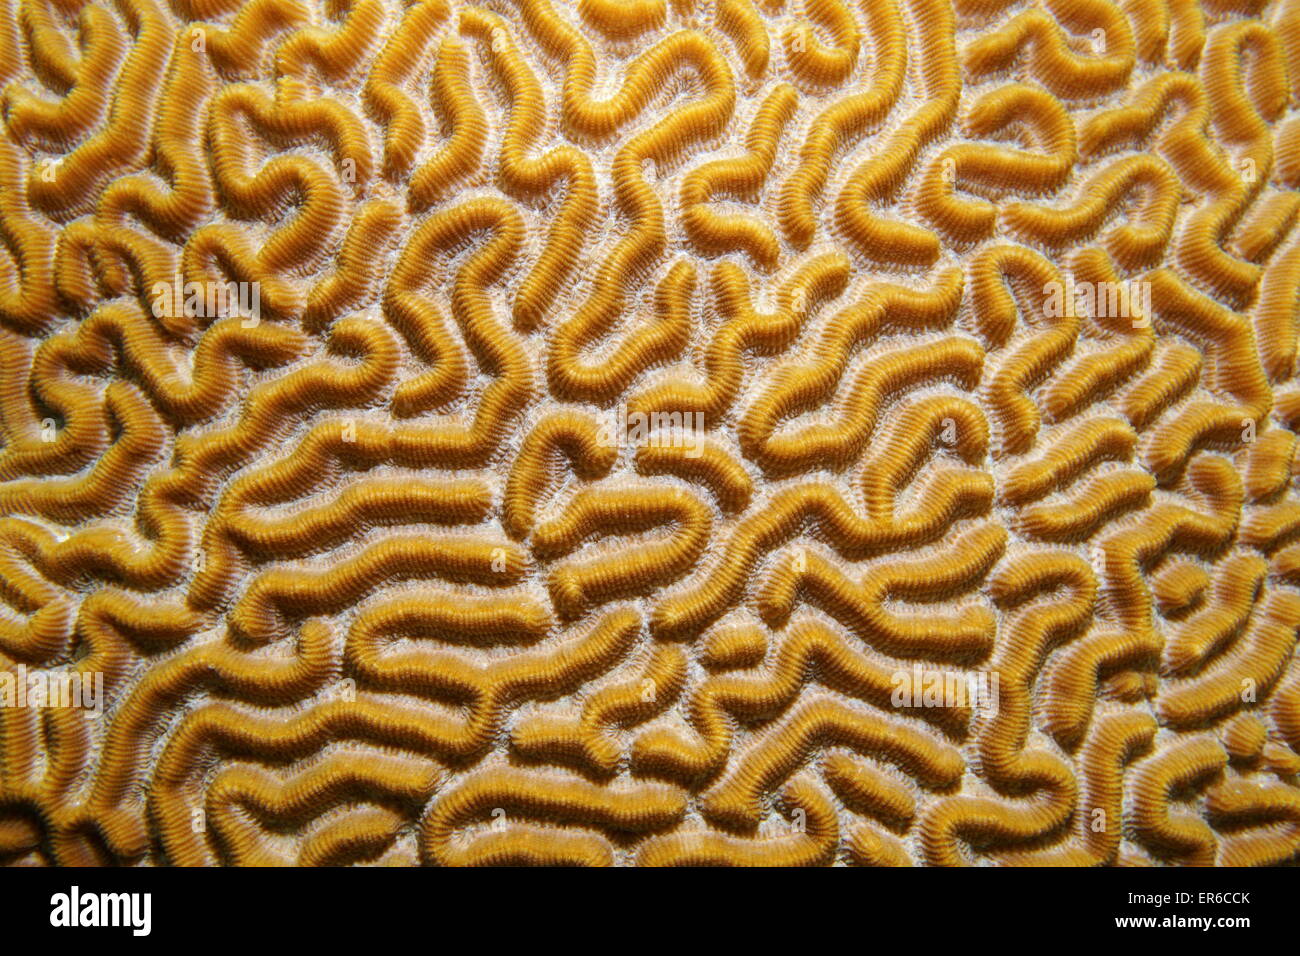 Underwater life, close up image of symmetrical brain coral, Diploria strigosa, Caribbean sea Stock Photo